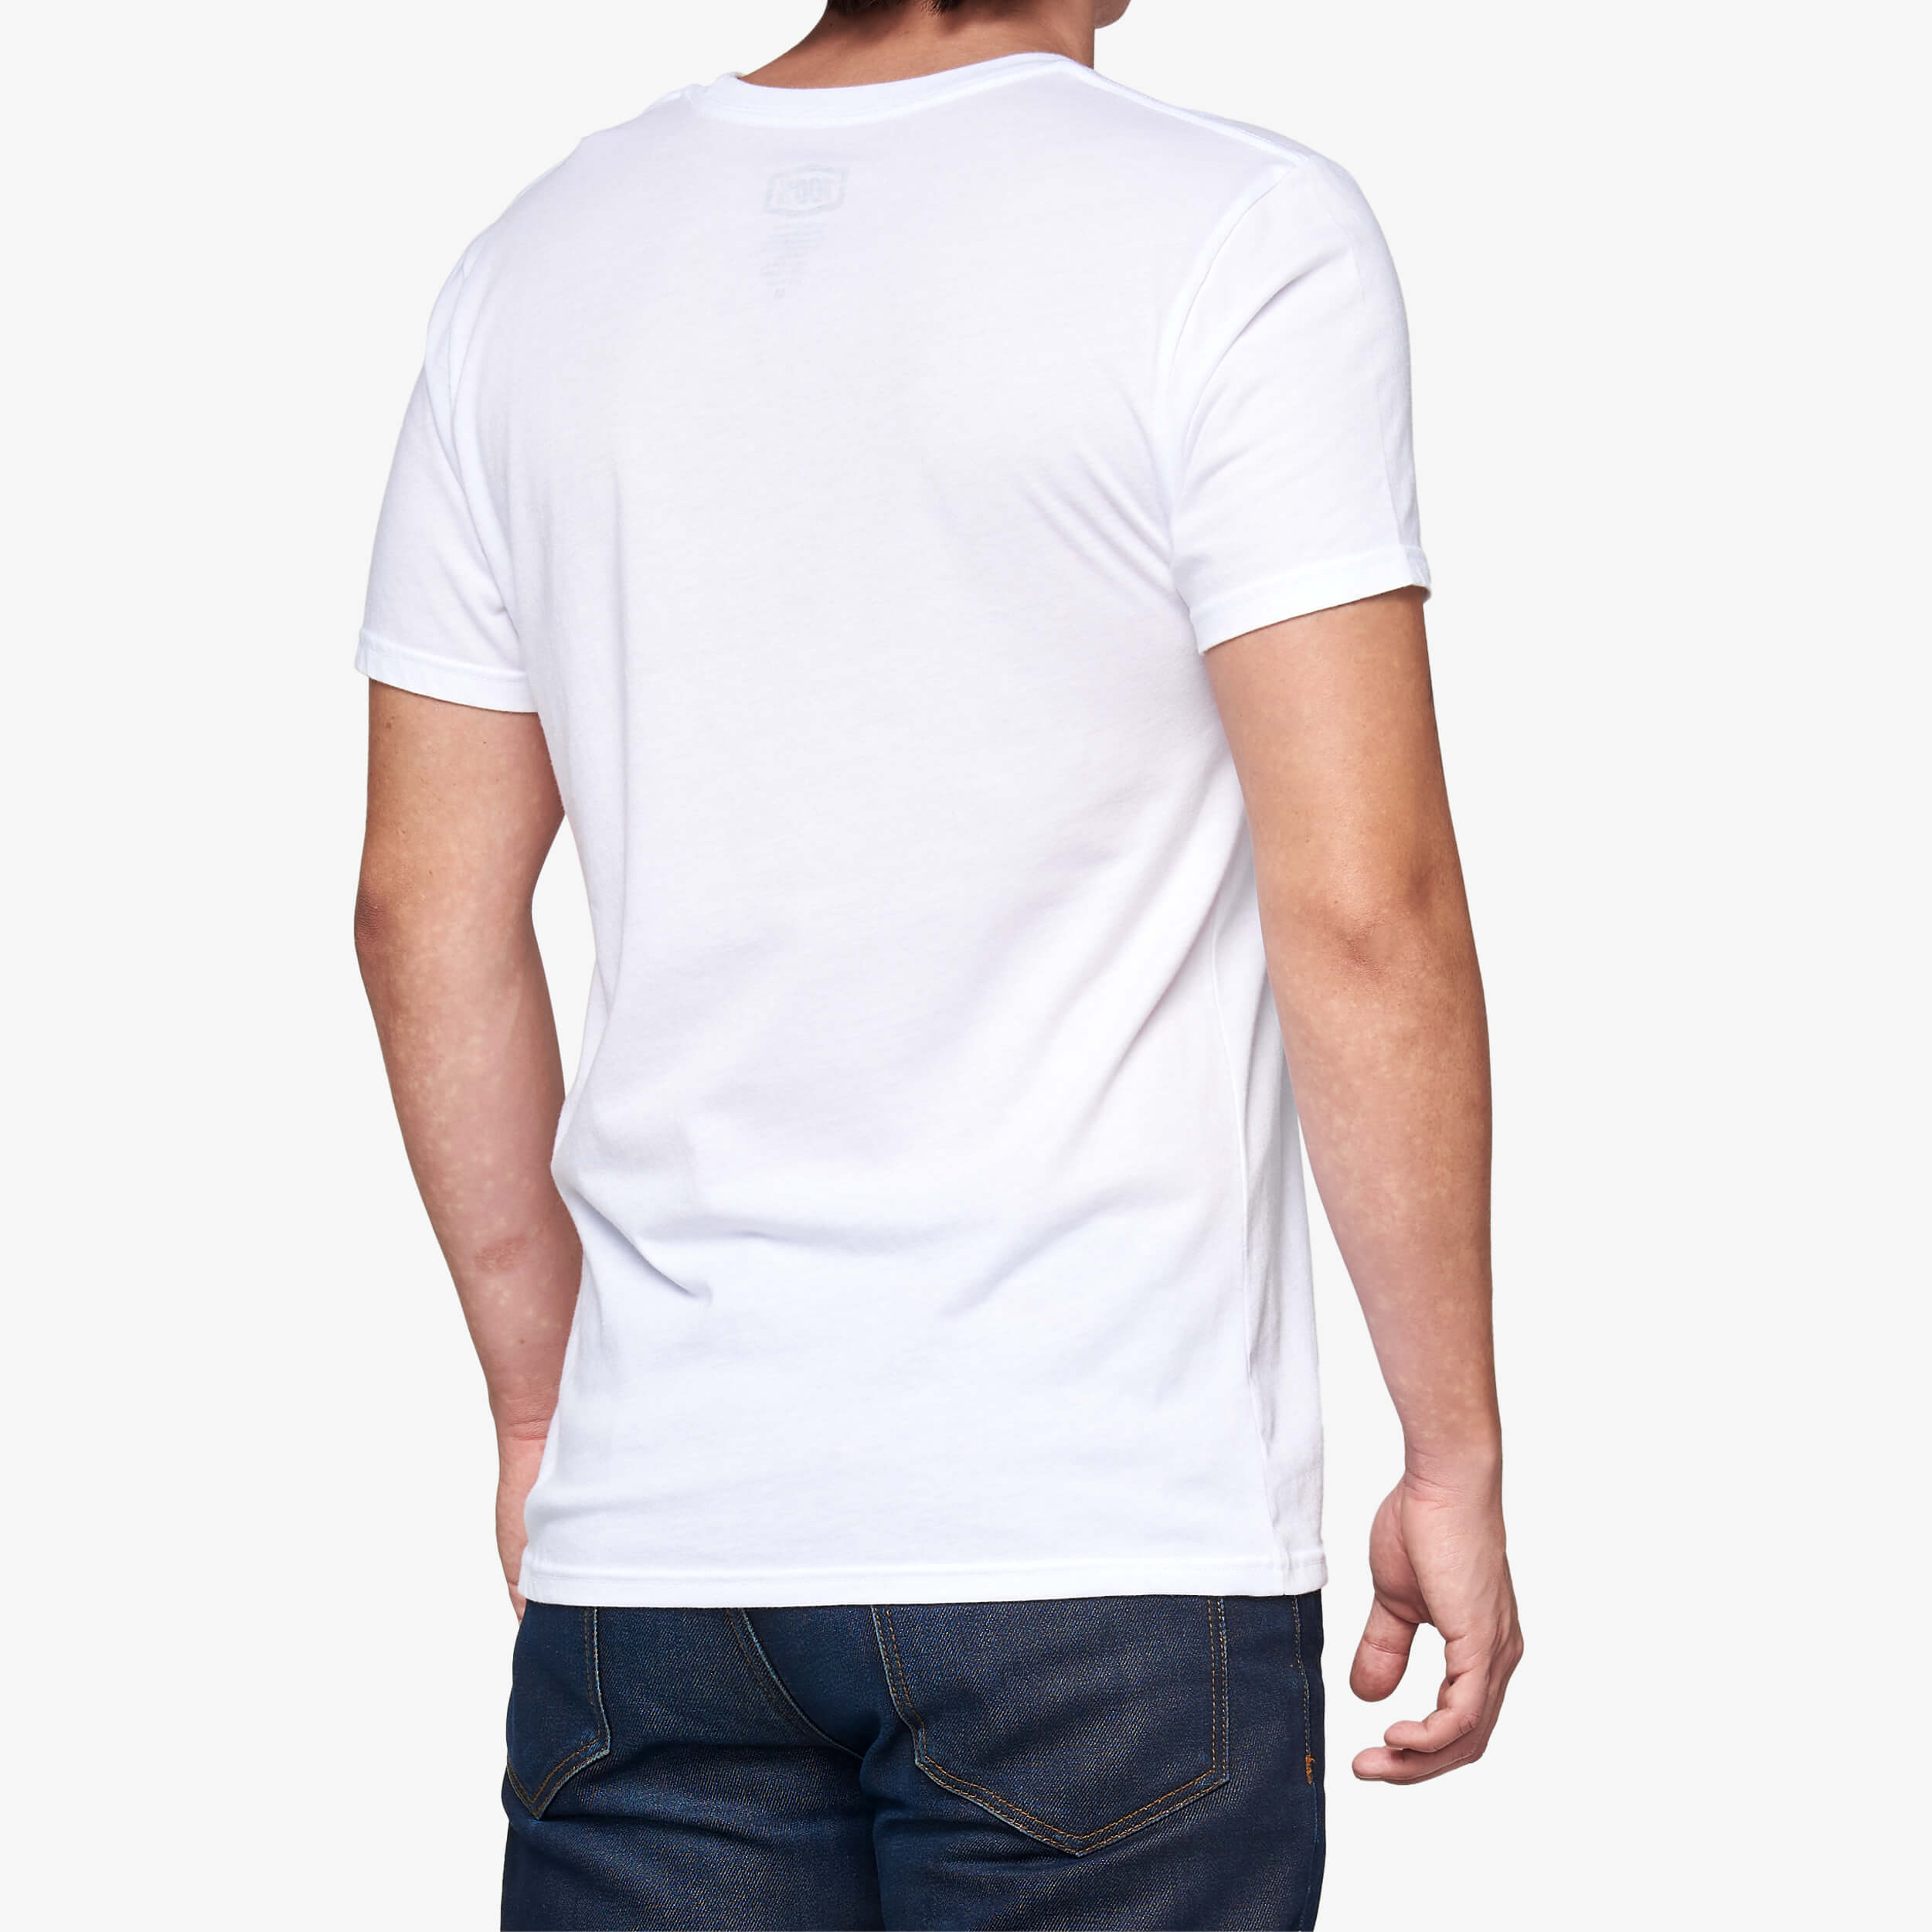 BB33 REPEAT T-Shirt White - Secondary